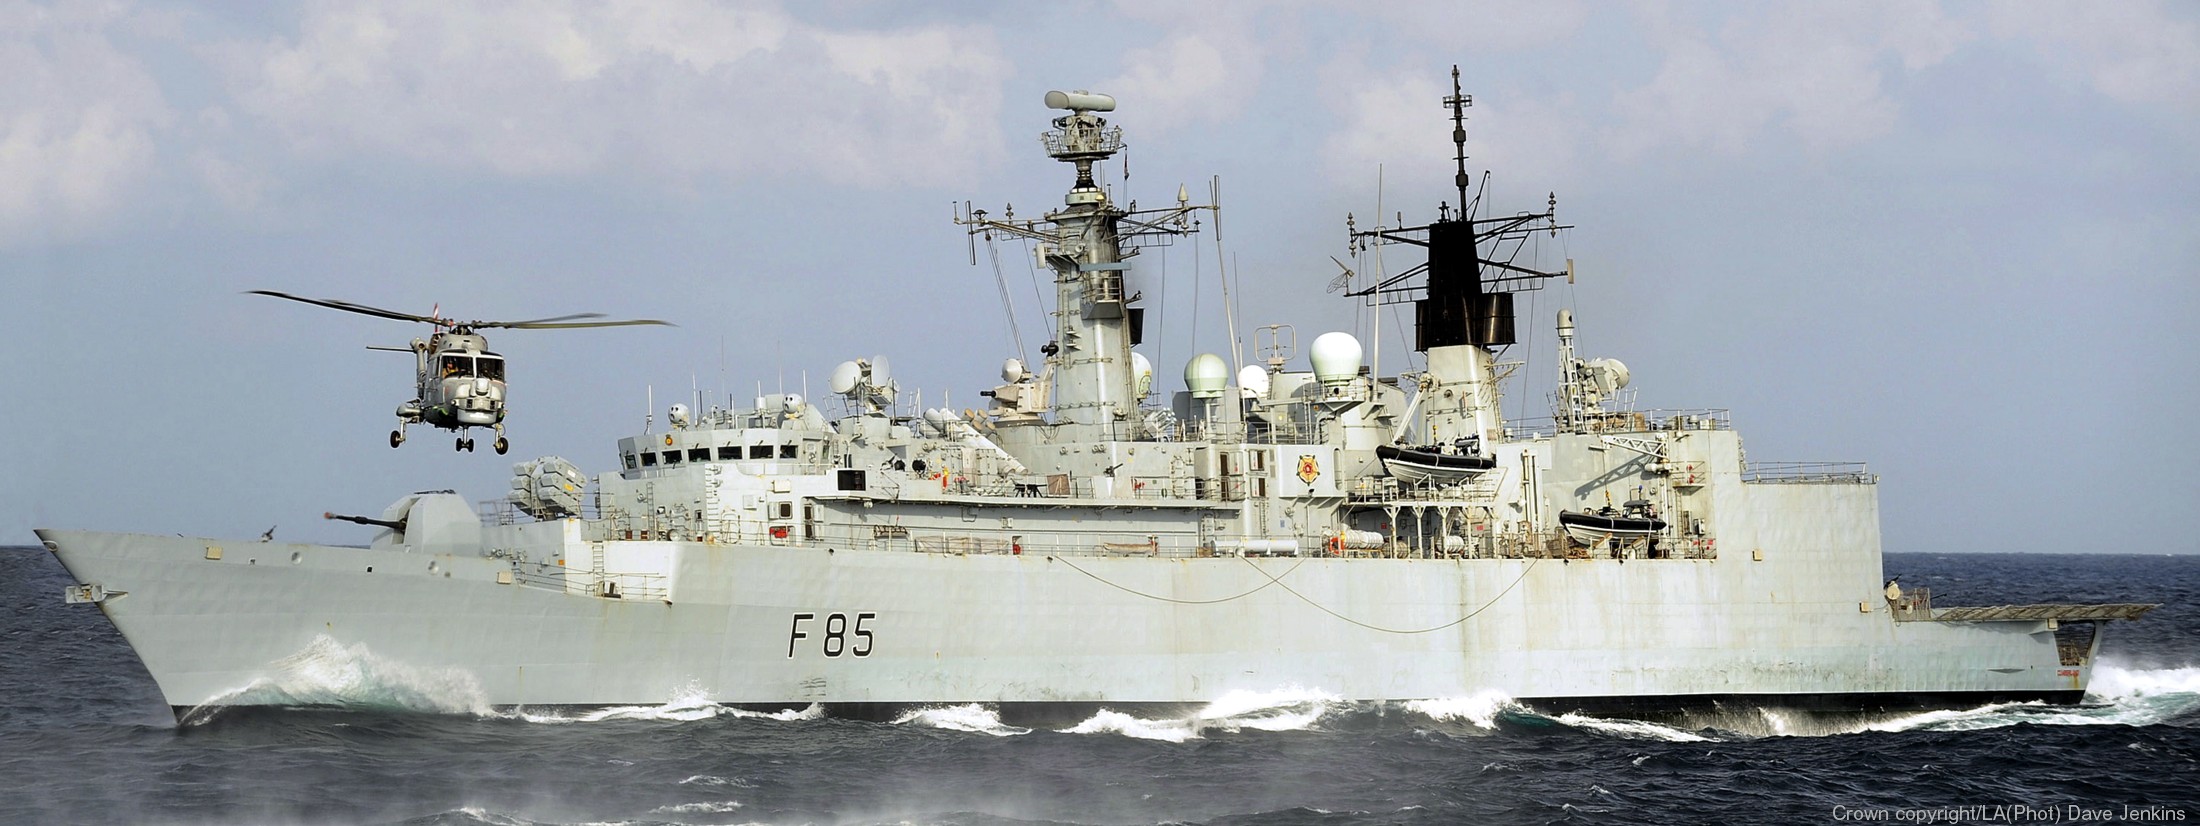 hms cumberland f 85 type 22 broadsword class frigate royal navy